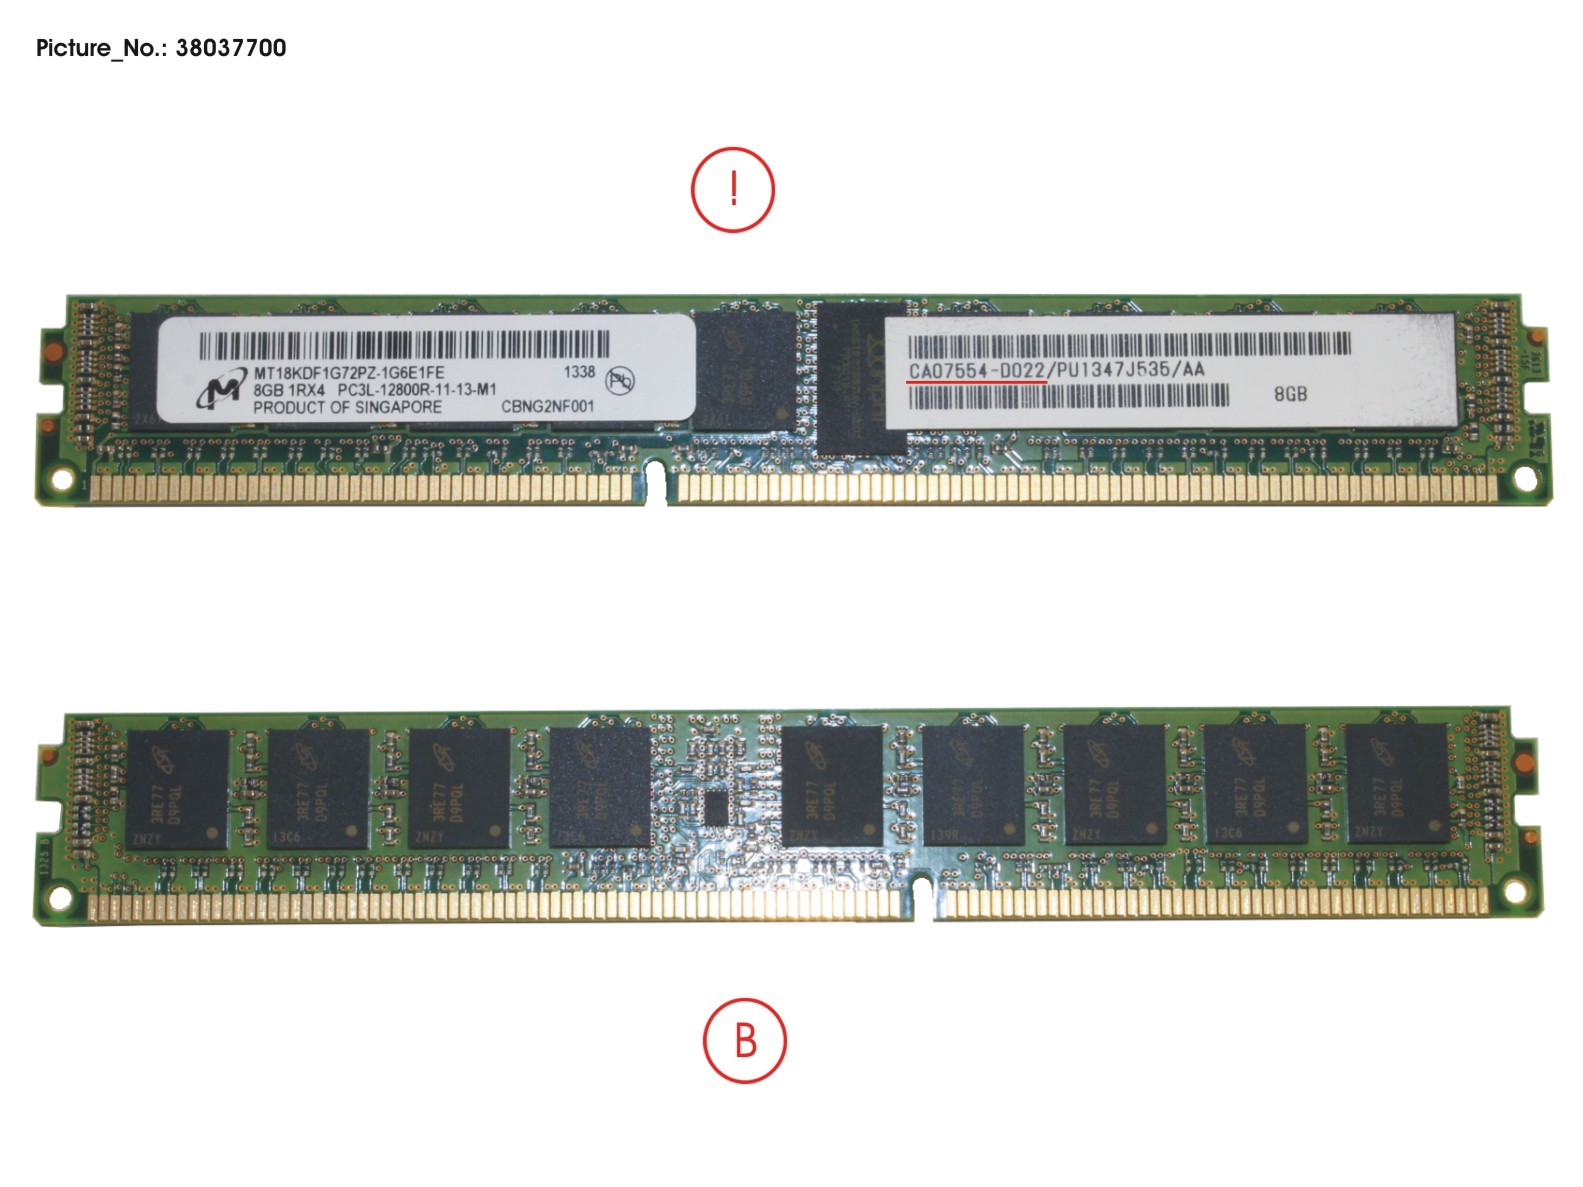 DX100/200 S3 CACHEMEM 8GB 1X DIMM